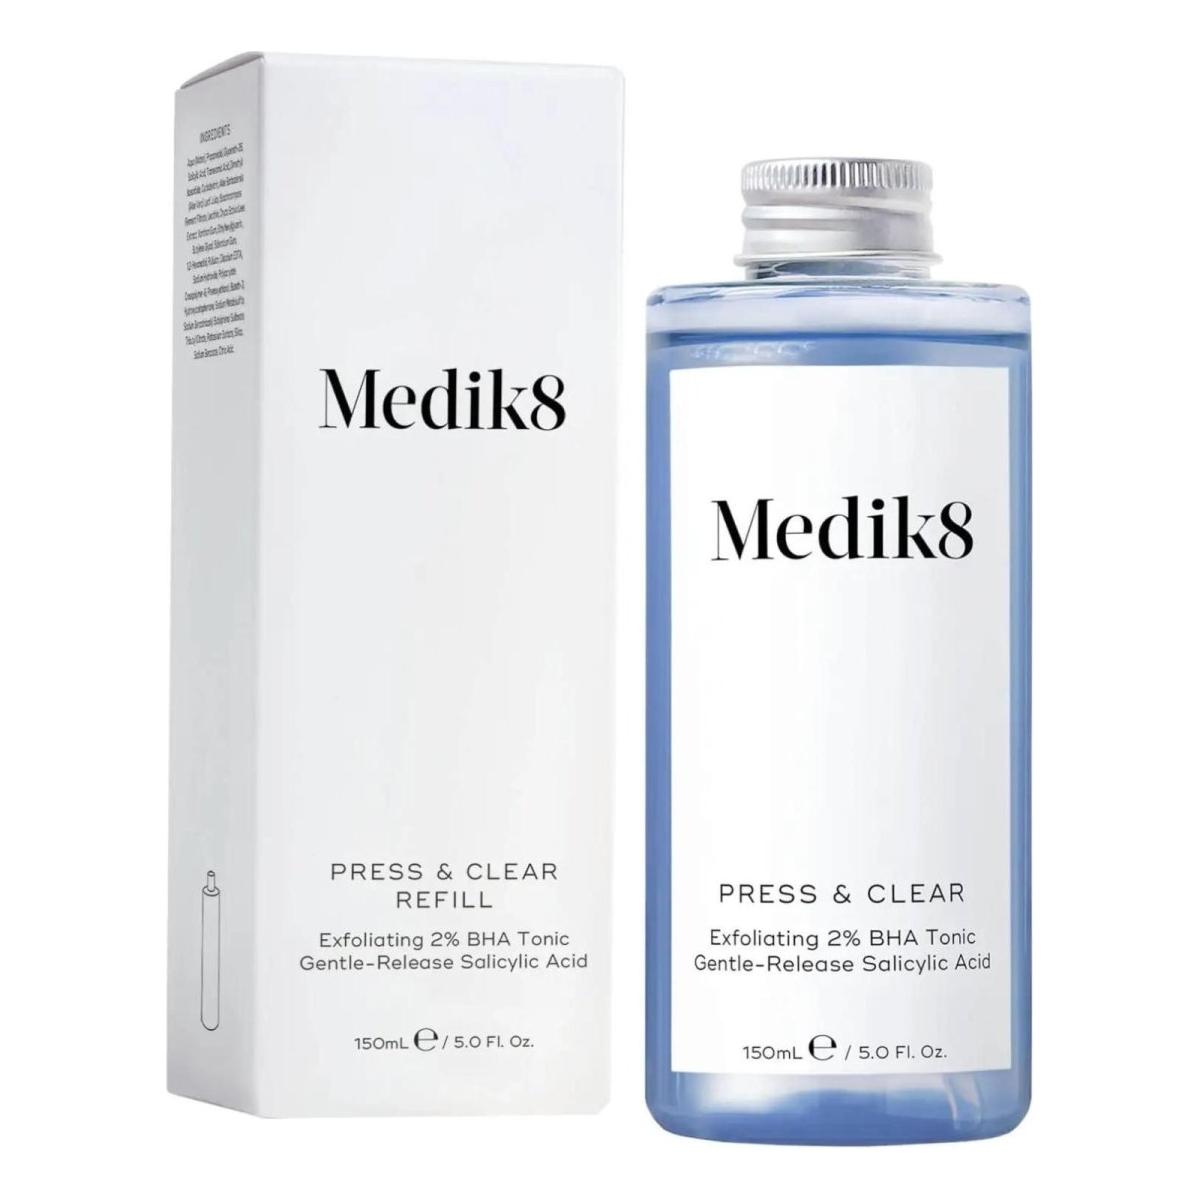 Medik8 | Press & Clear | 150ml - DG International Ventures Limited